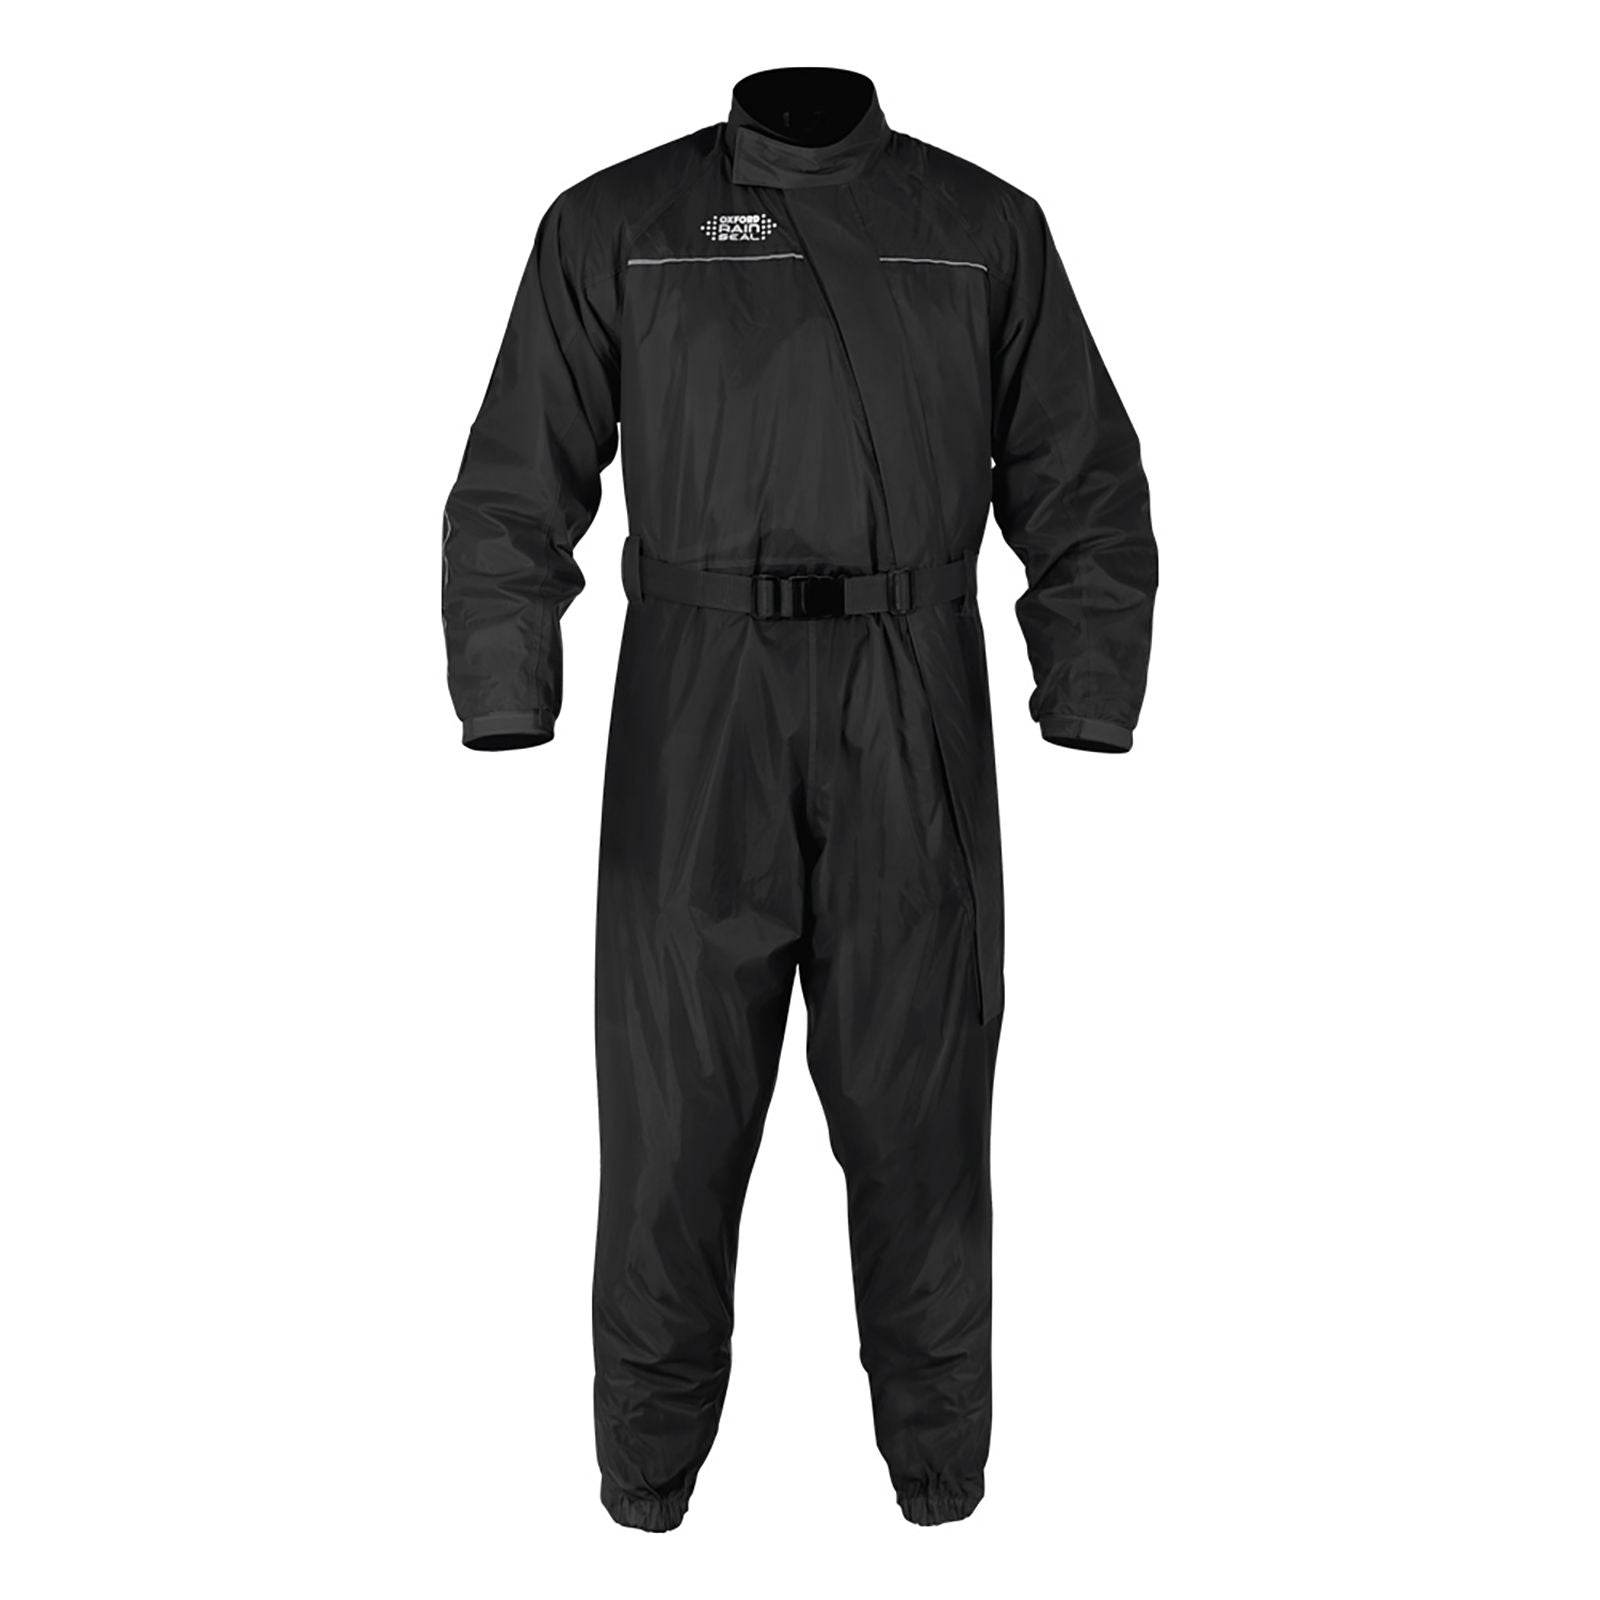 New OXFORD Rainseal Rain Suit - Black - 6XL #OXRM3006XL